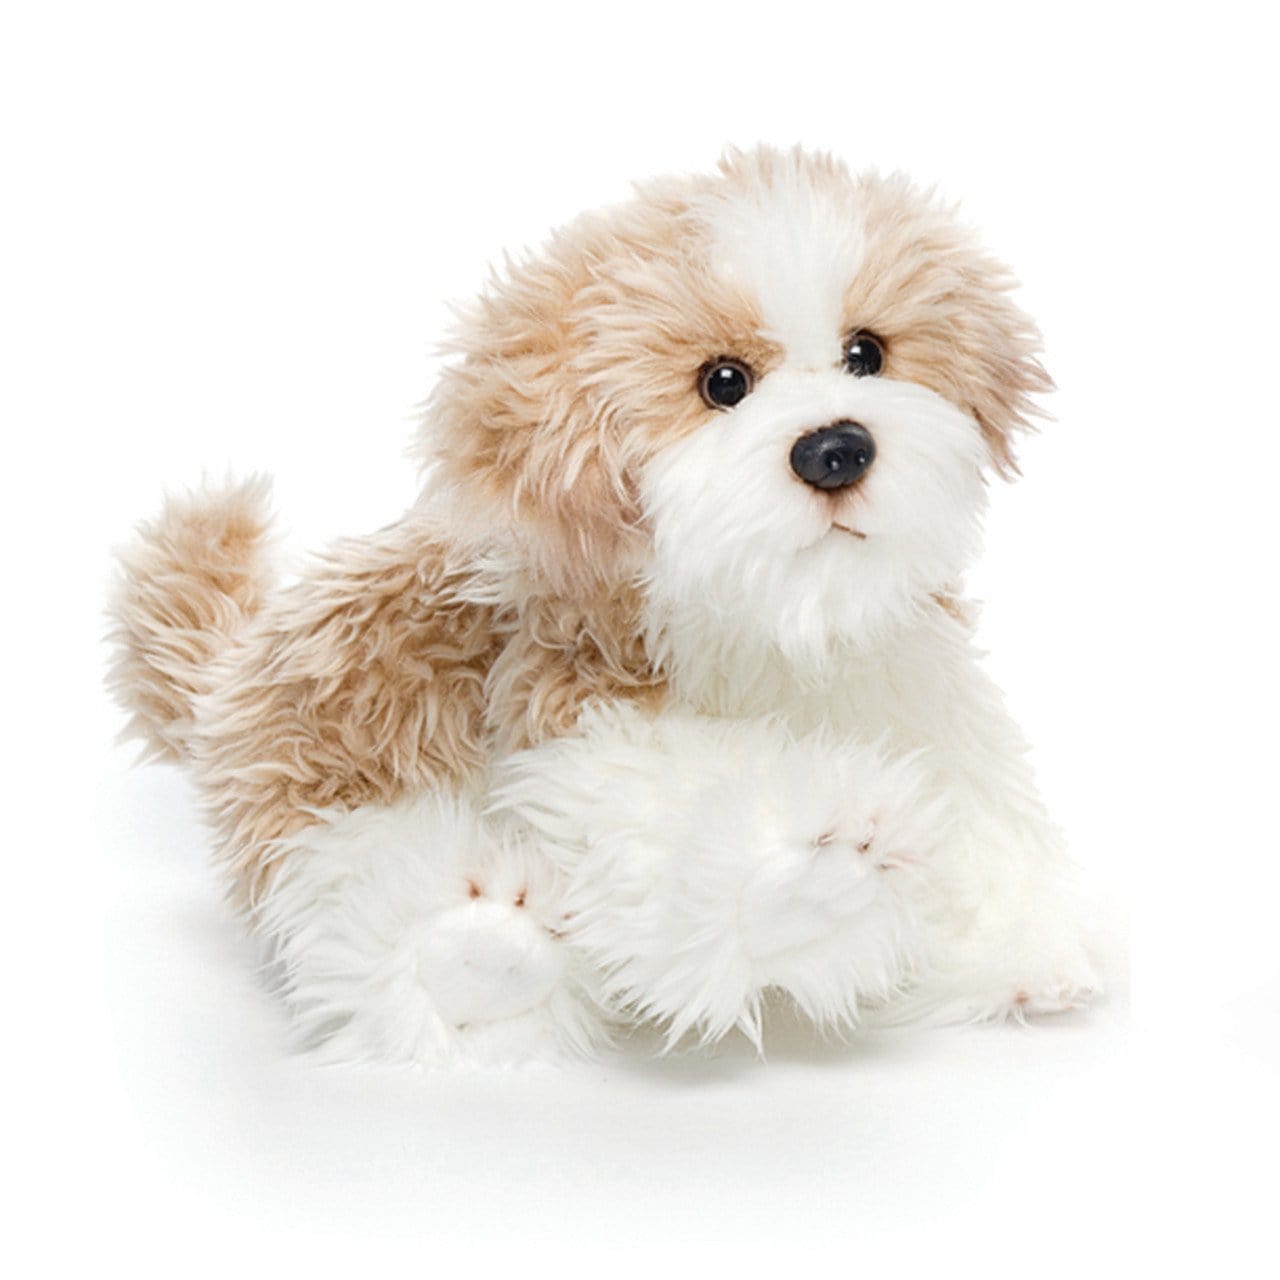 Plush Toy Dogs: Yorkie, Maltese, Chihuahua, Pug